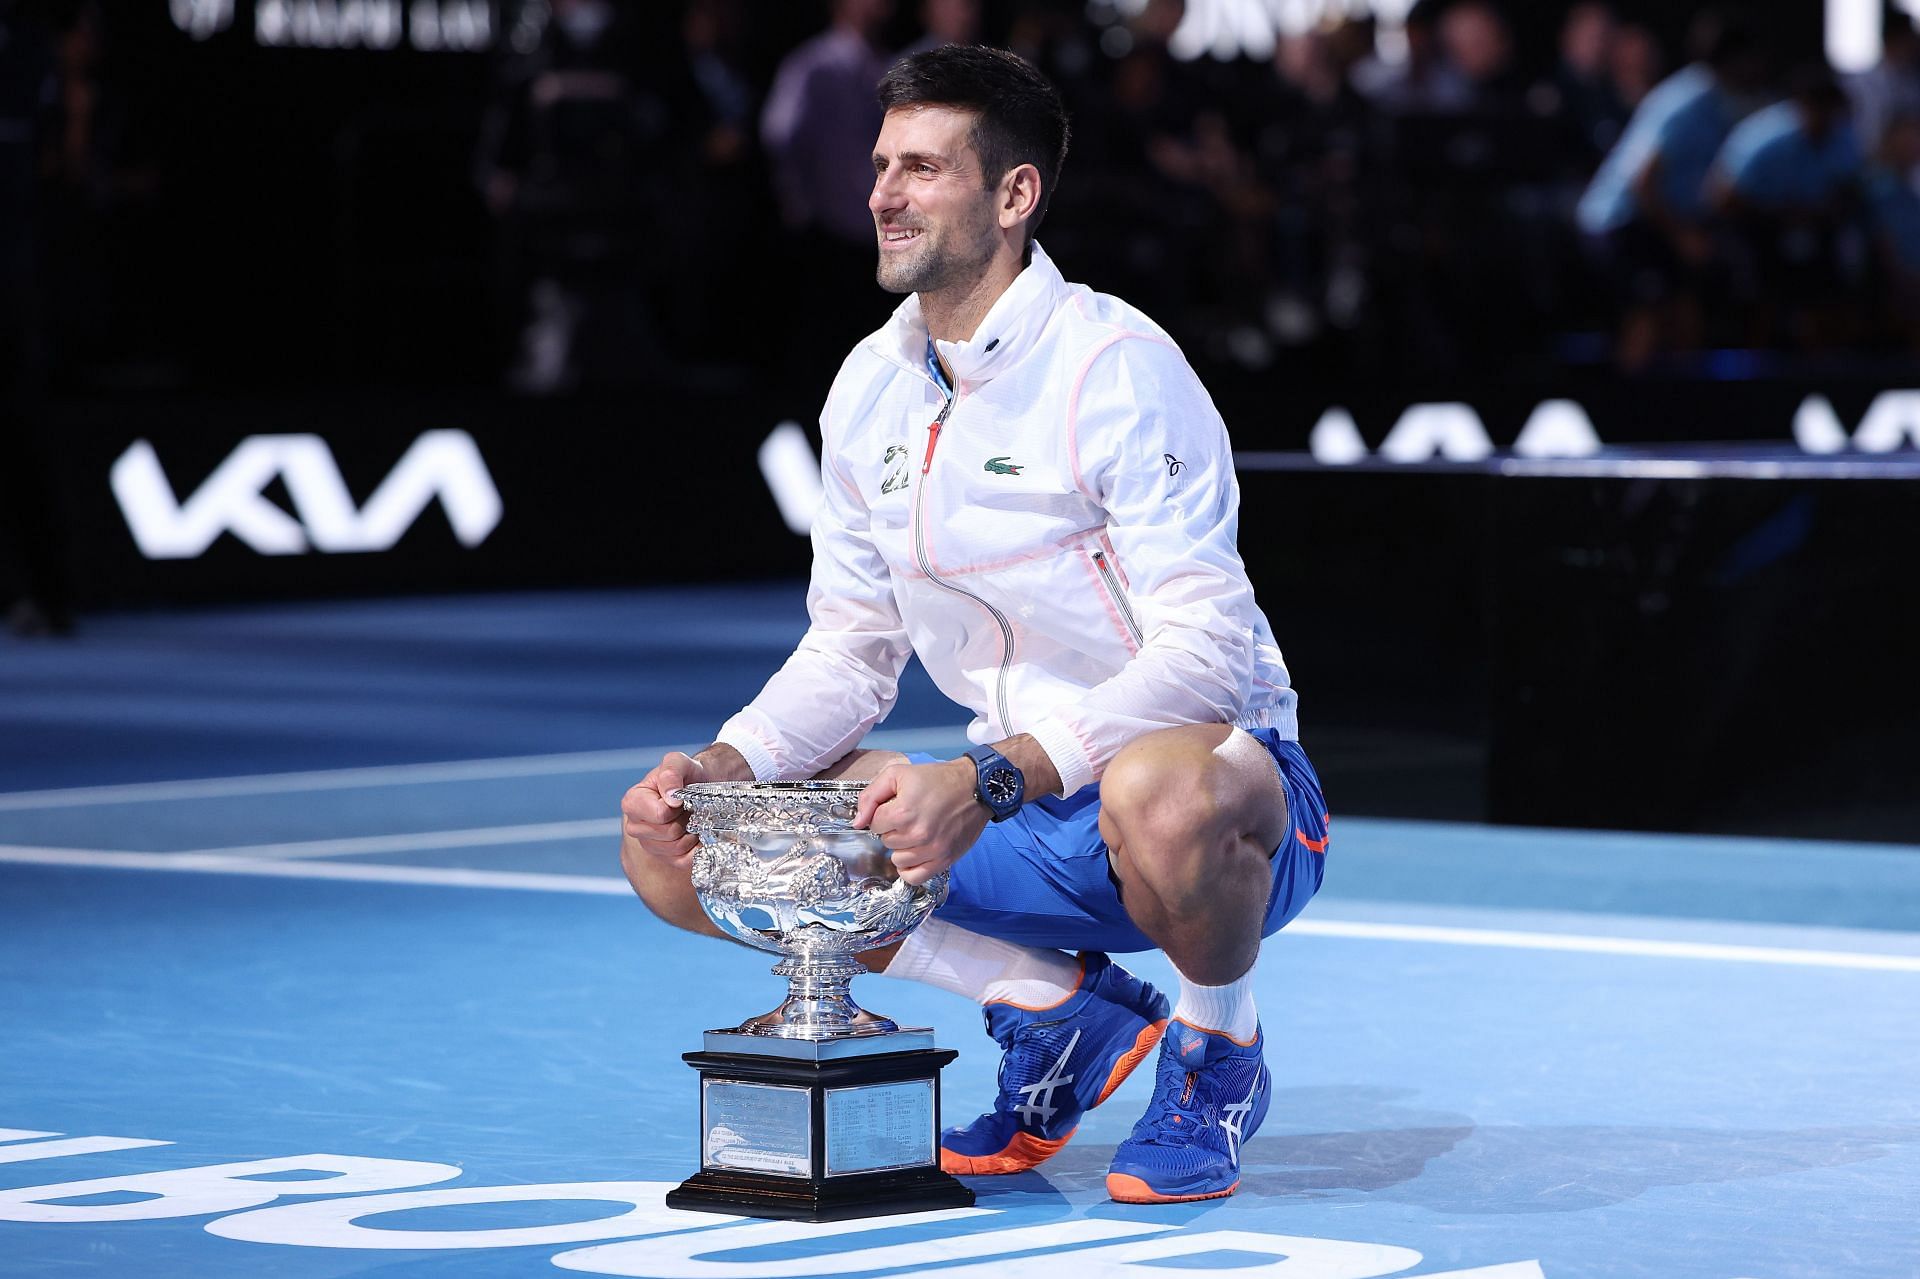 2023 Australian Open champion, Novak Djokovic